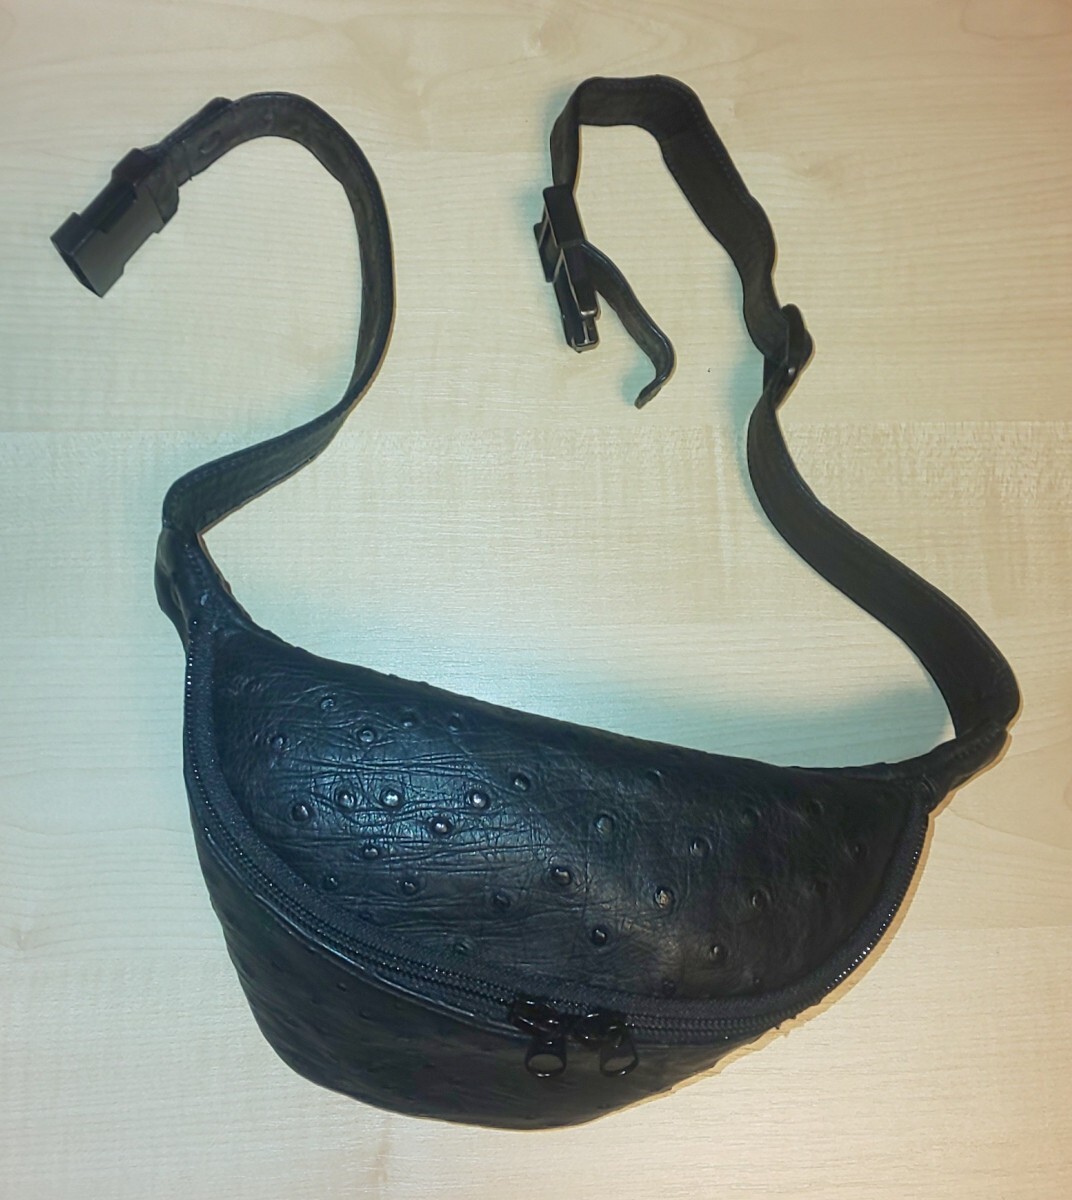  Ostrich поясная сумка сумка-пояс чёрный 